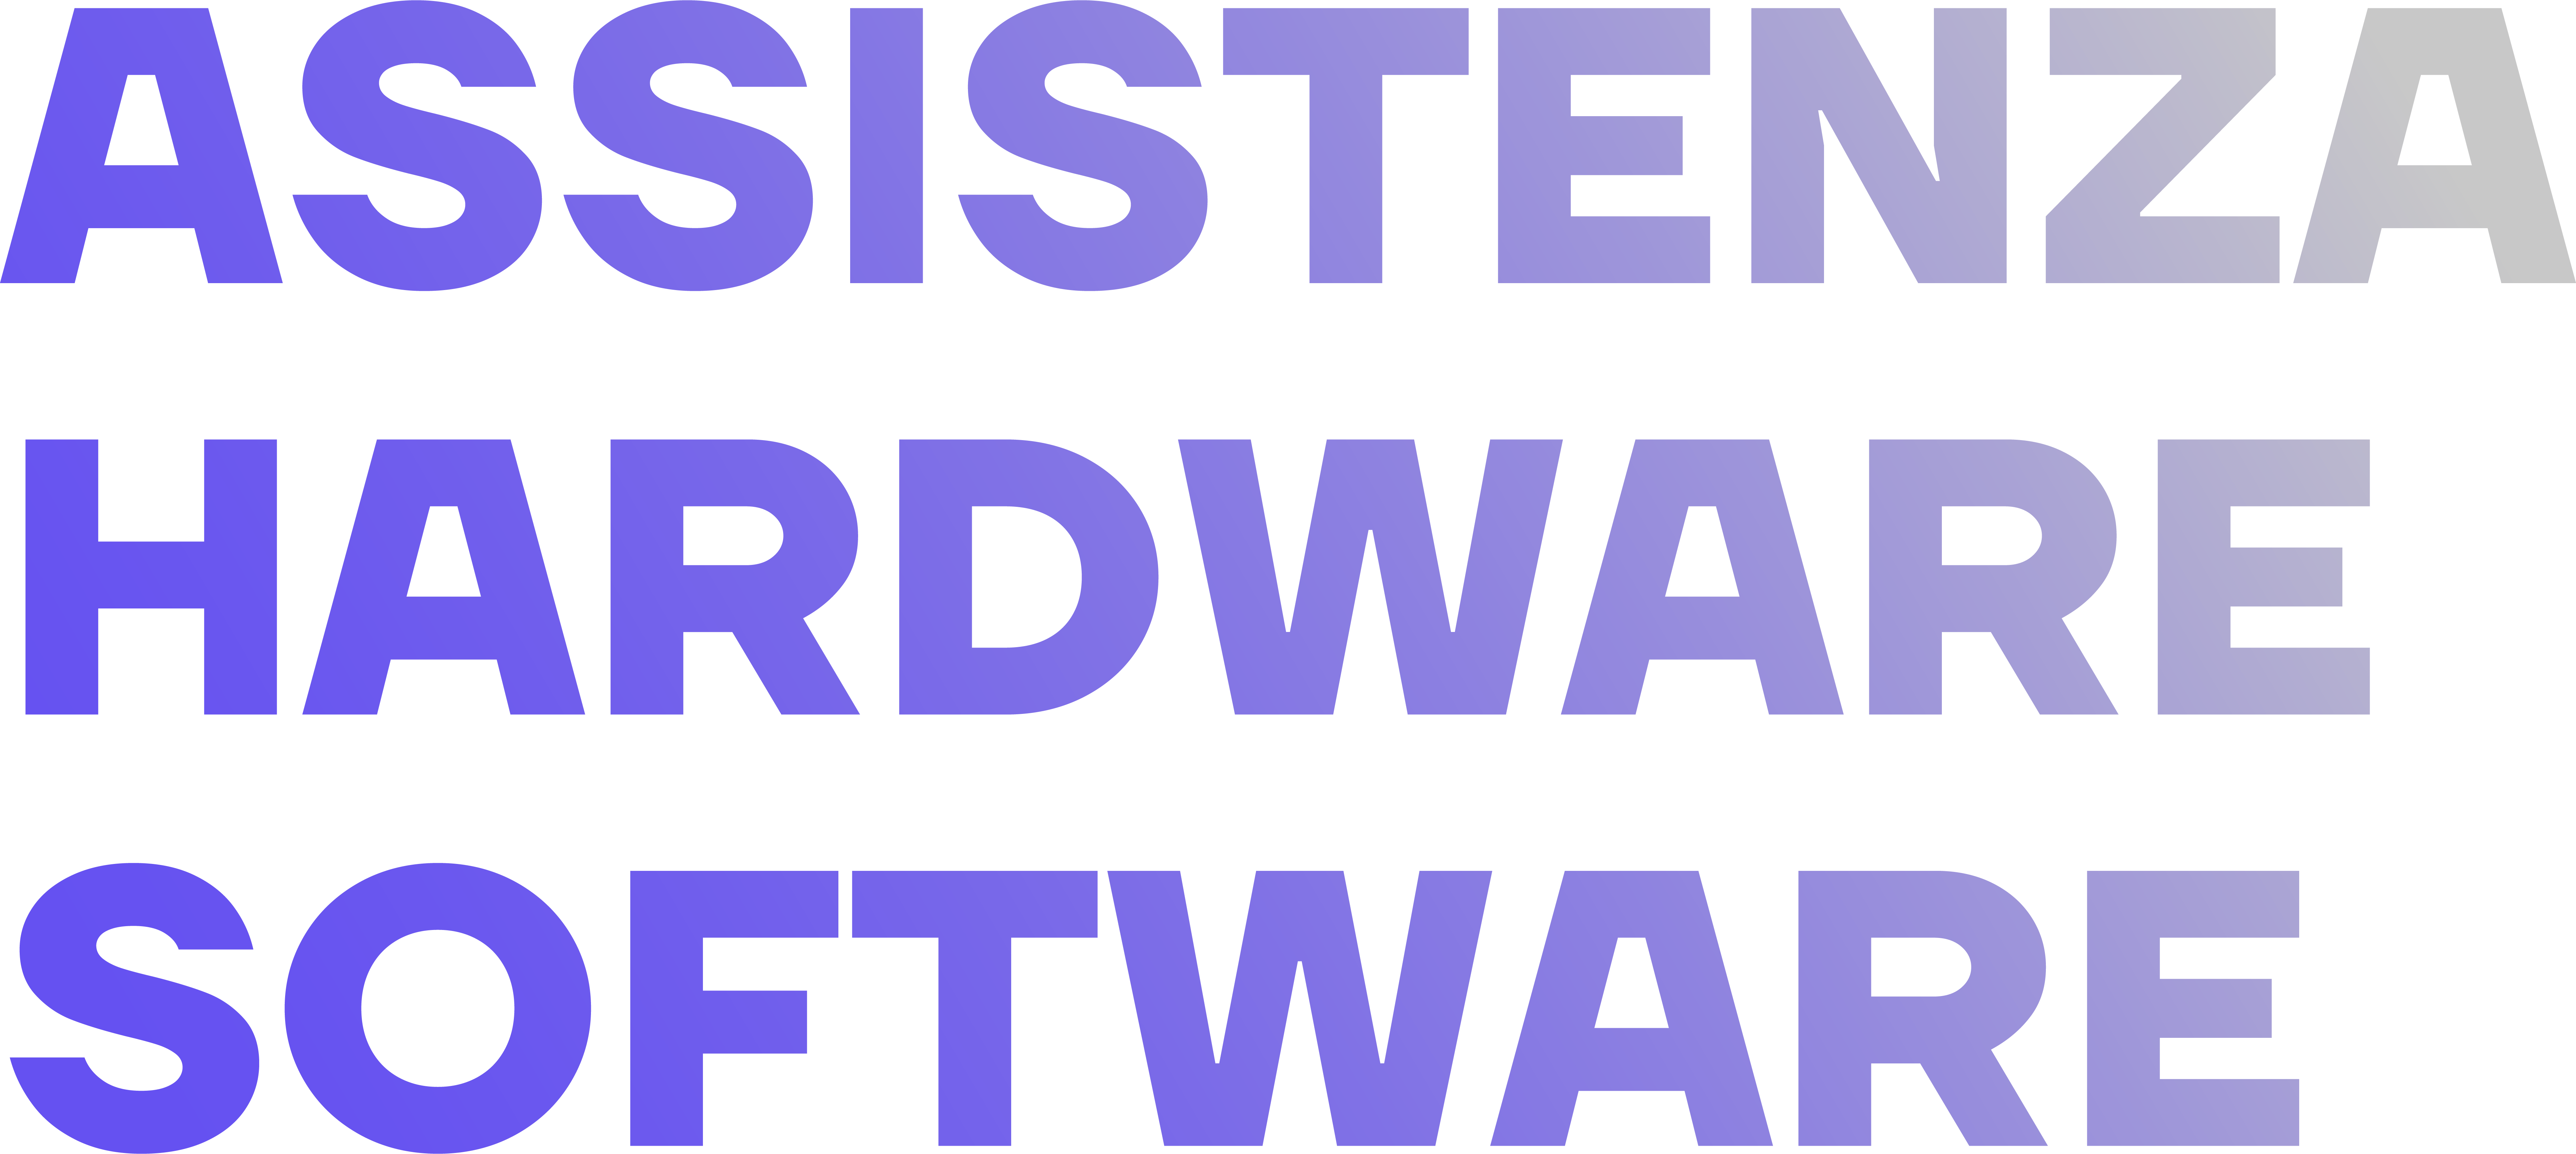 Assistenza Hardware Software